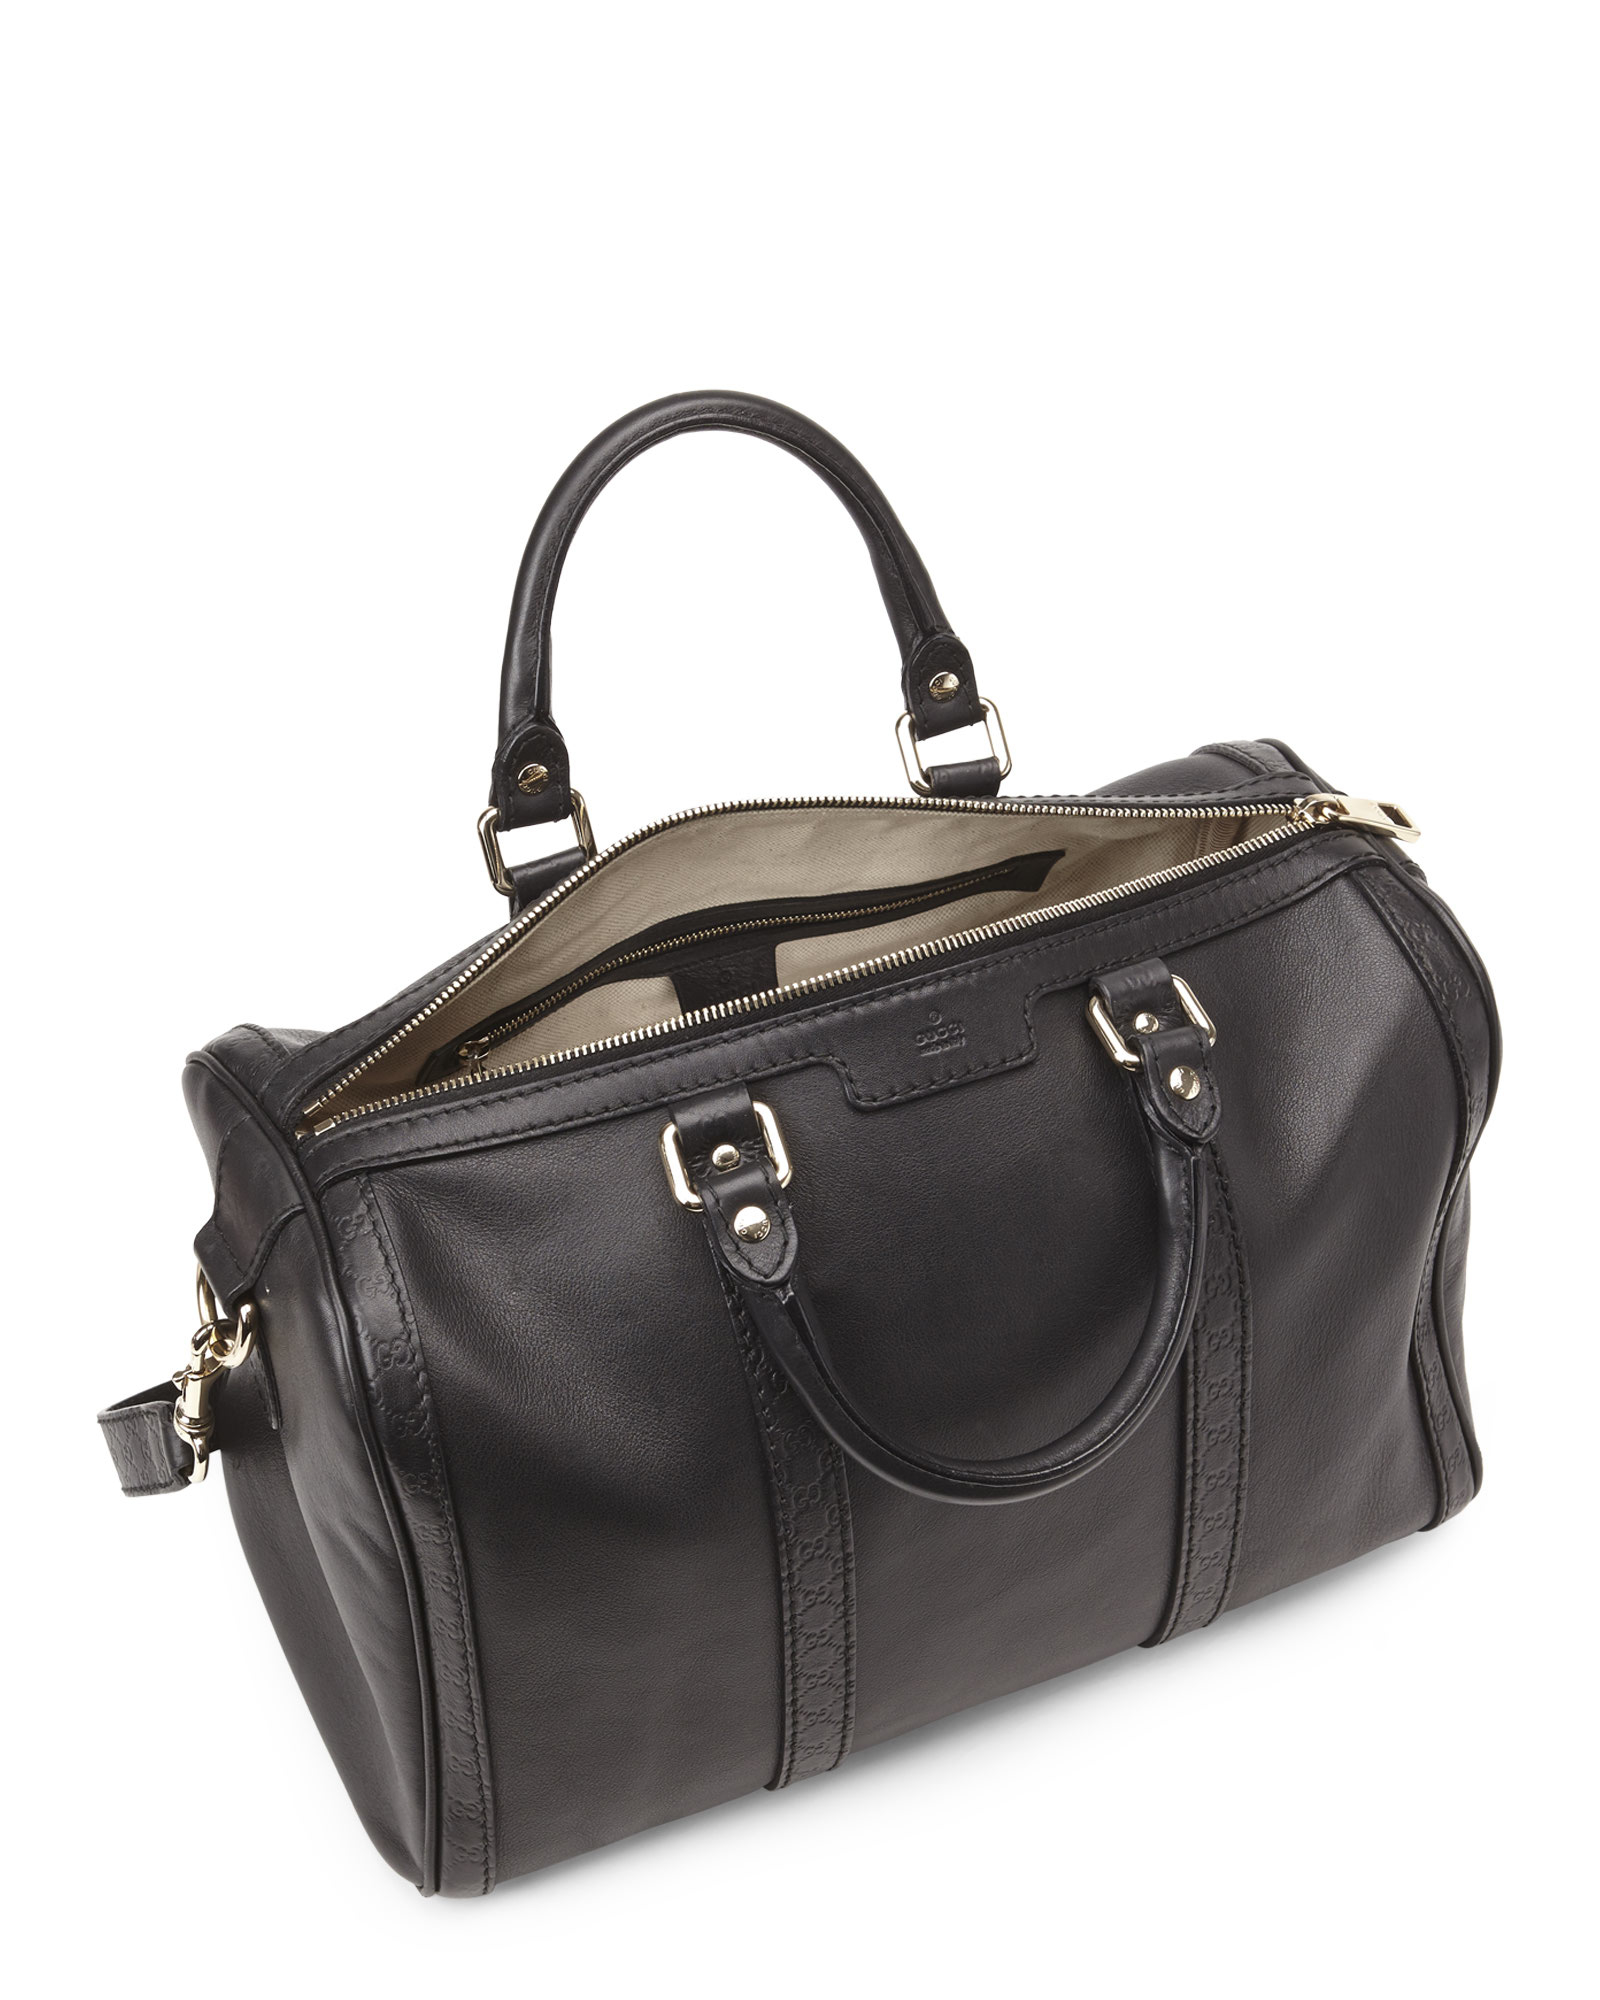 Lyst - Gucci Black Leather & Microssima Joy Boston Bag in Black